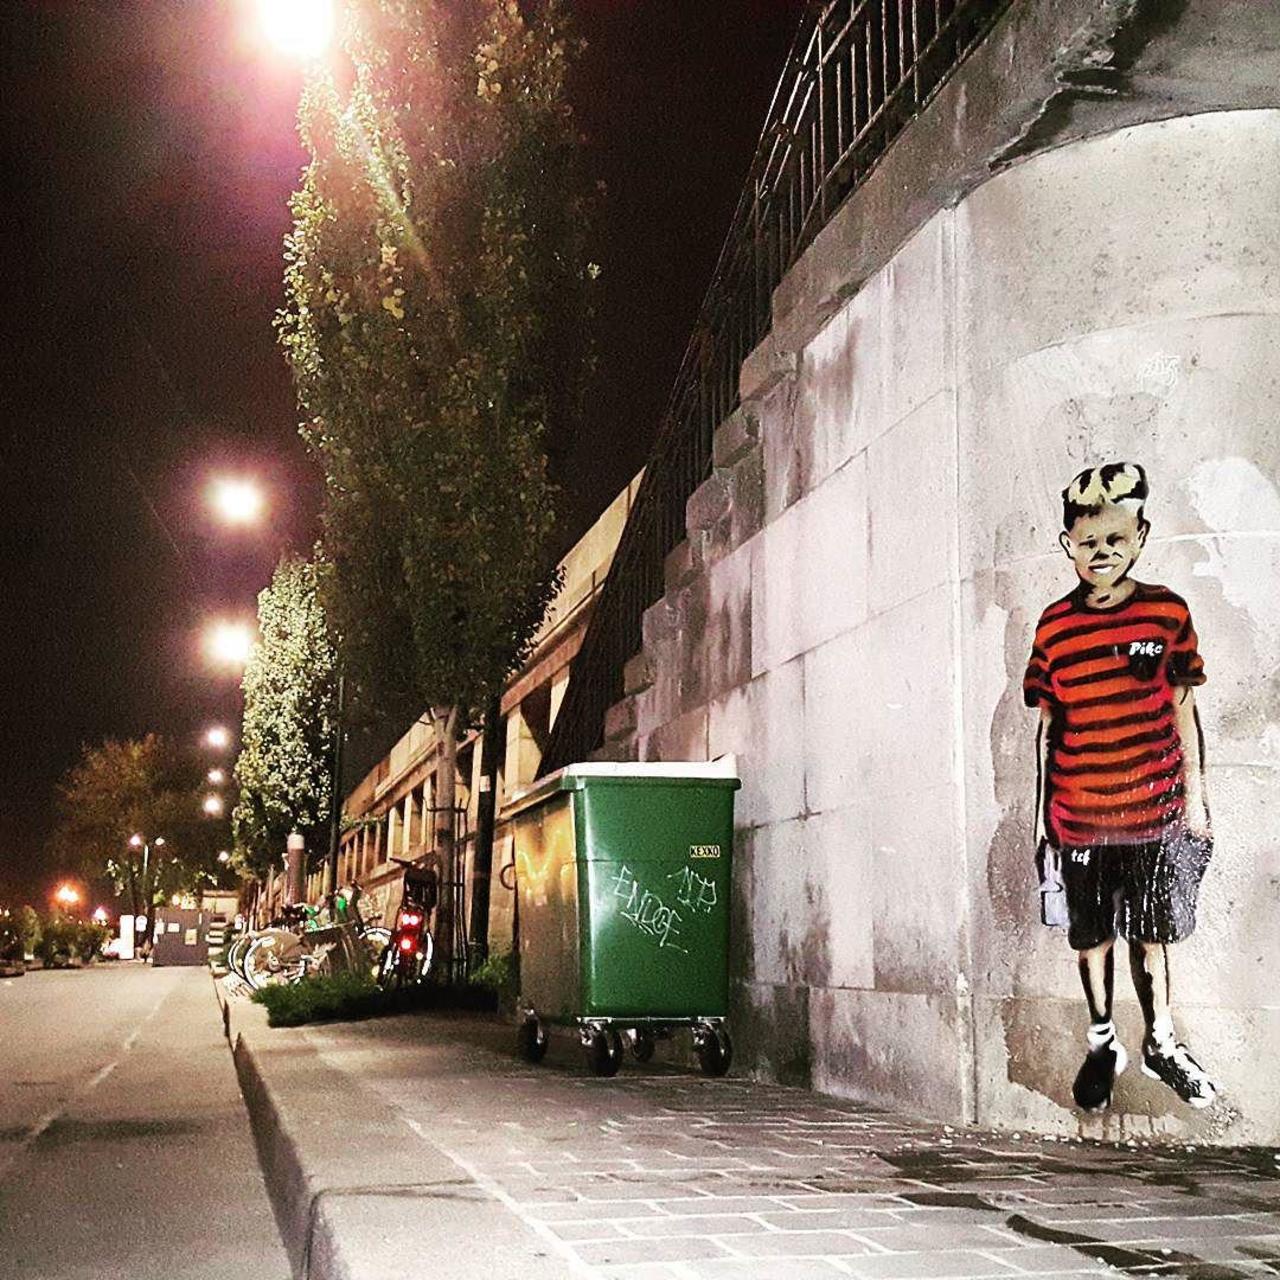 #Paris #graffiti photo by @the169 http://ift.tt/1M53lXH #StreetArt http://t.co/9s6Xr7aufV